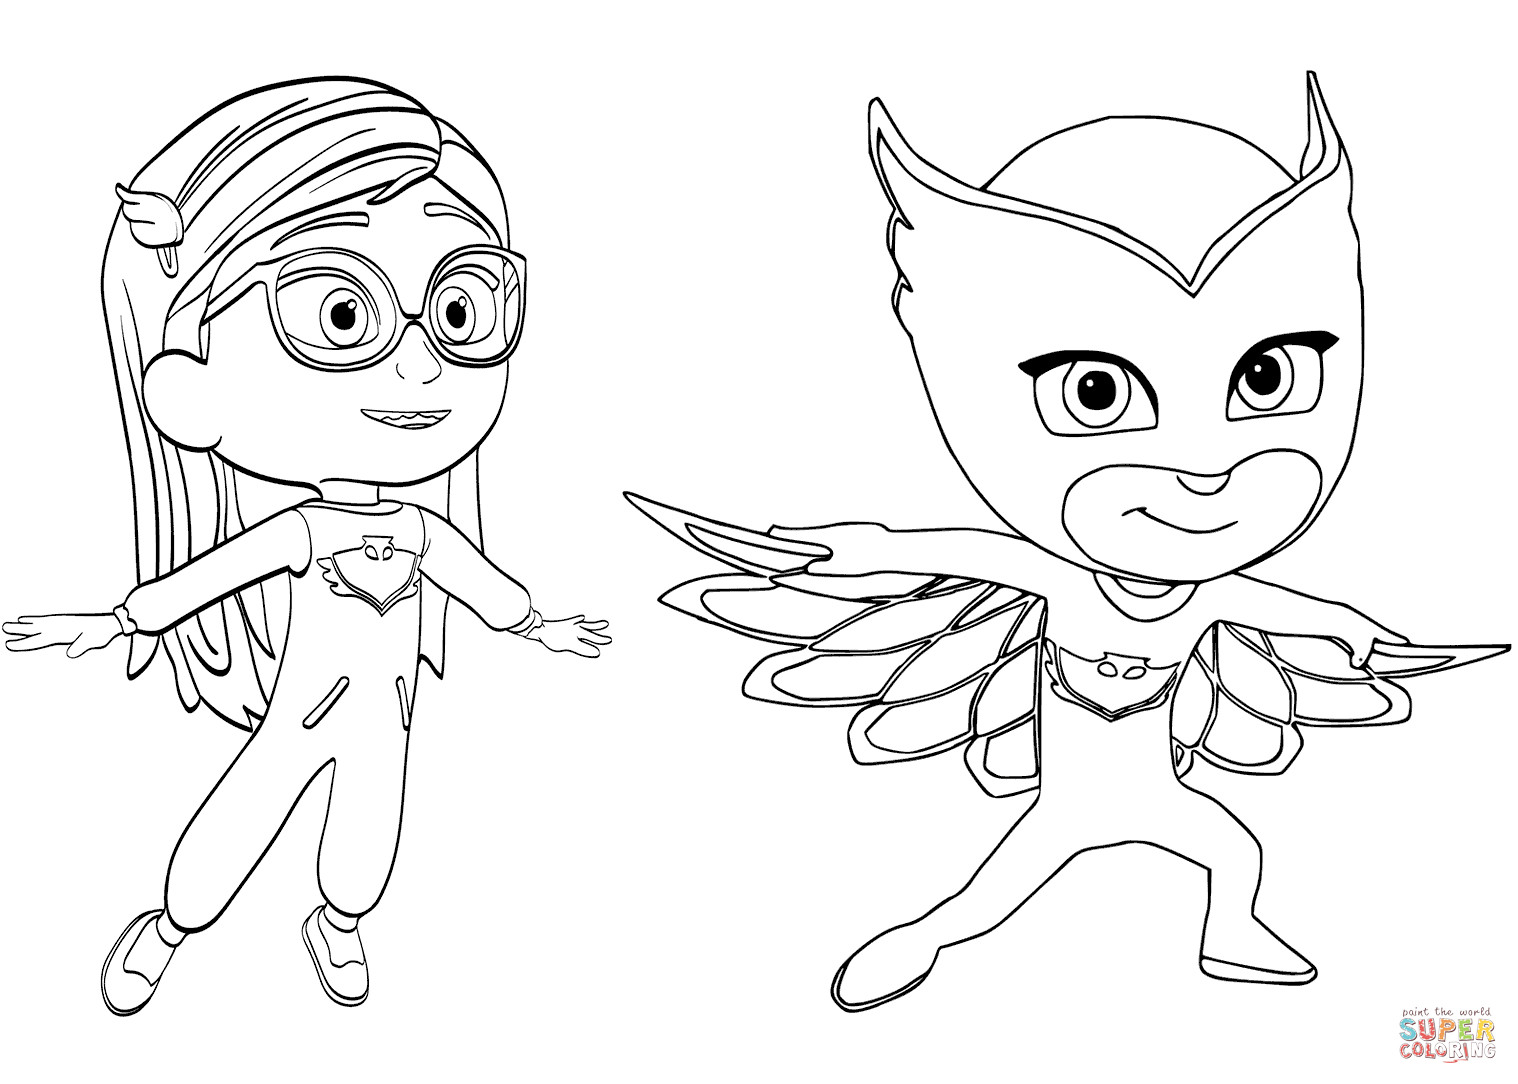 Pj Masks Coloring Pages Printable
 Pajama Hero Amaya is Owlette from PJ Masks coloring page